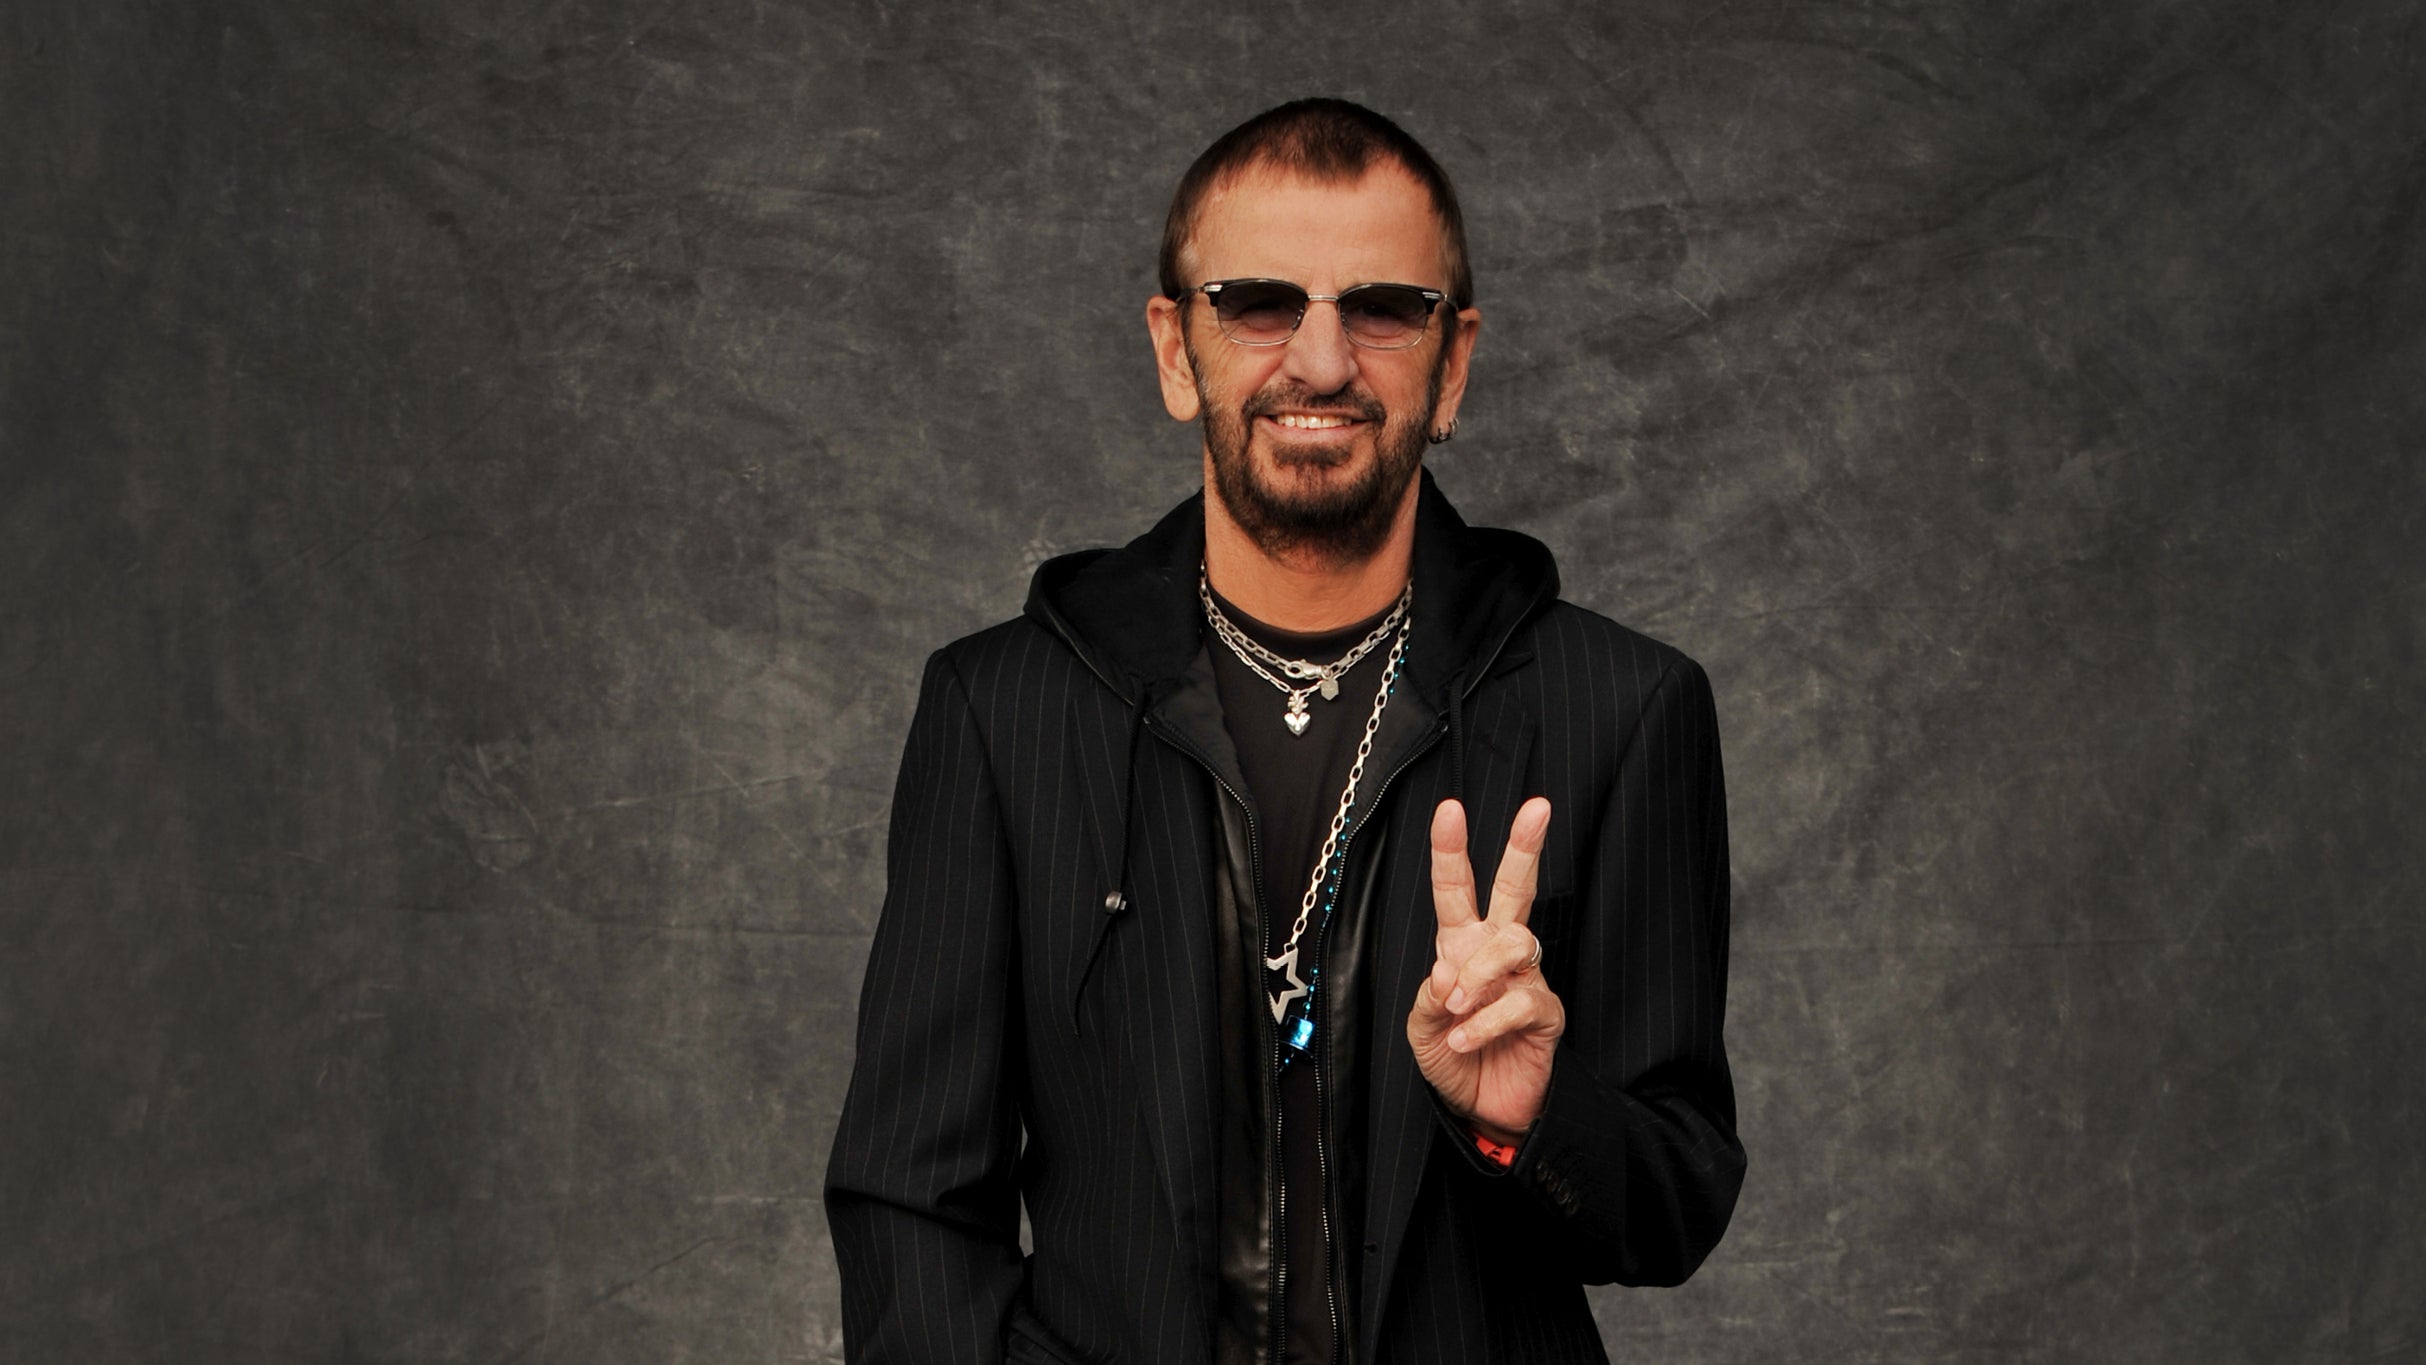 Ringo Starr in New York promo photo for Venue presale offer code